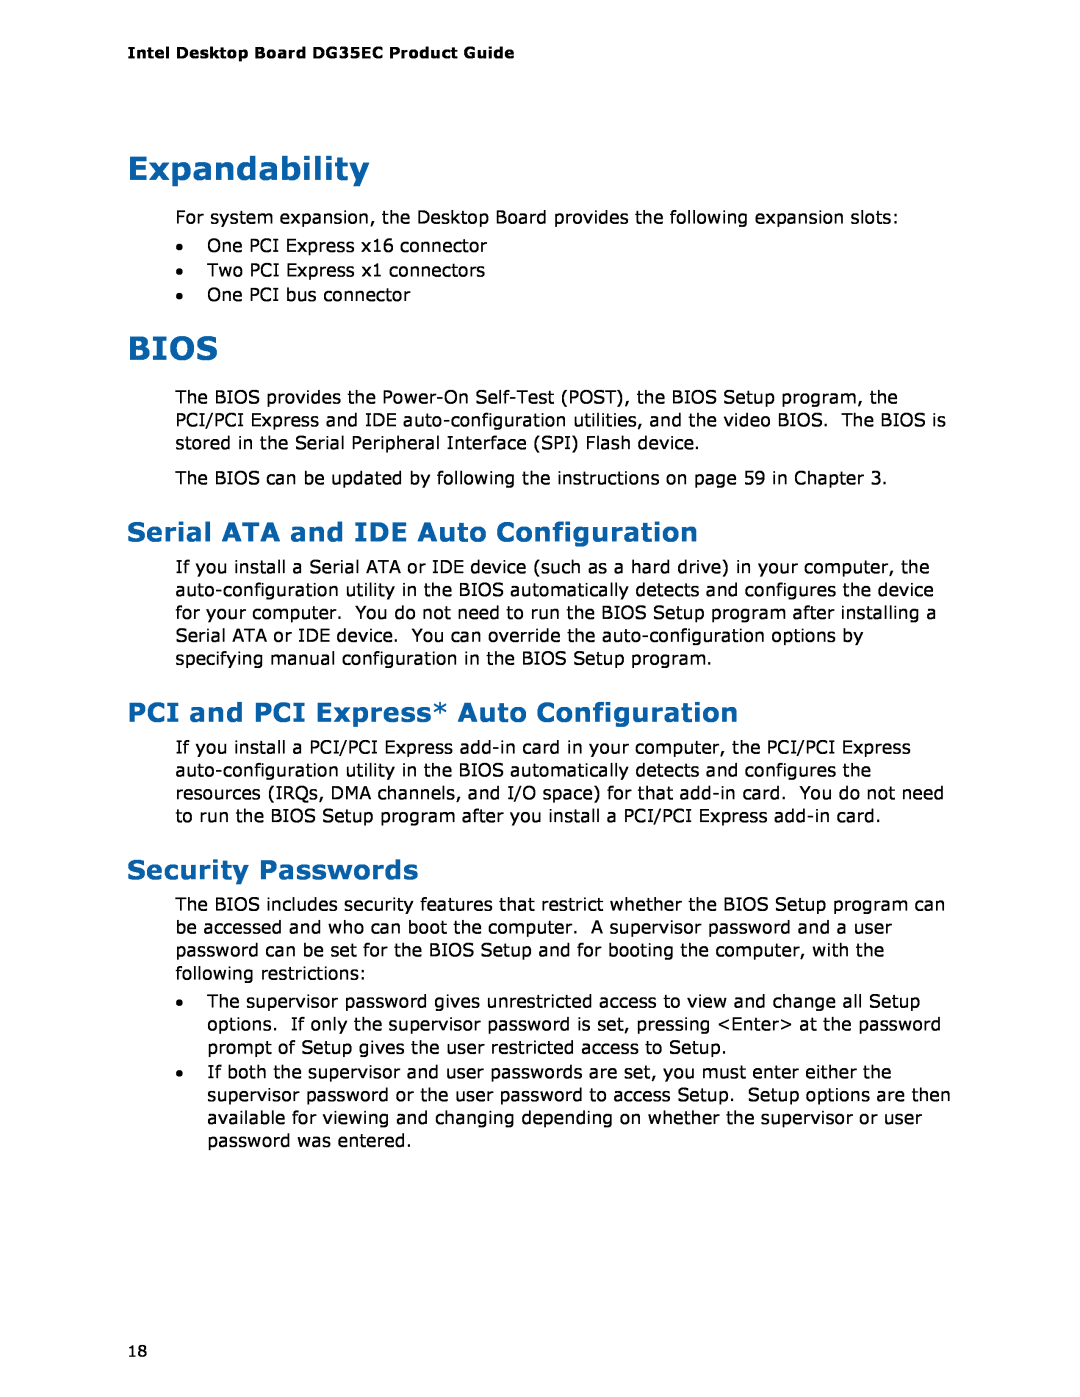 Intel Intel Desktop Board, DG35EC manual Expandability, Bios, Serial ATA and IDE Auto Configuration, Security Passwords 